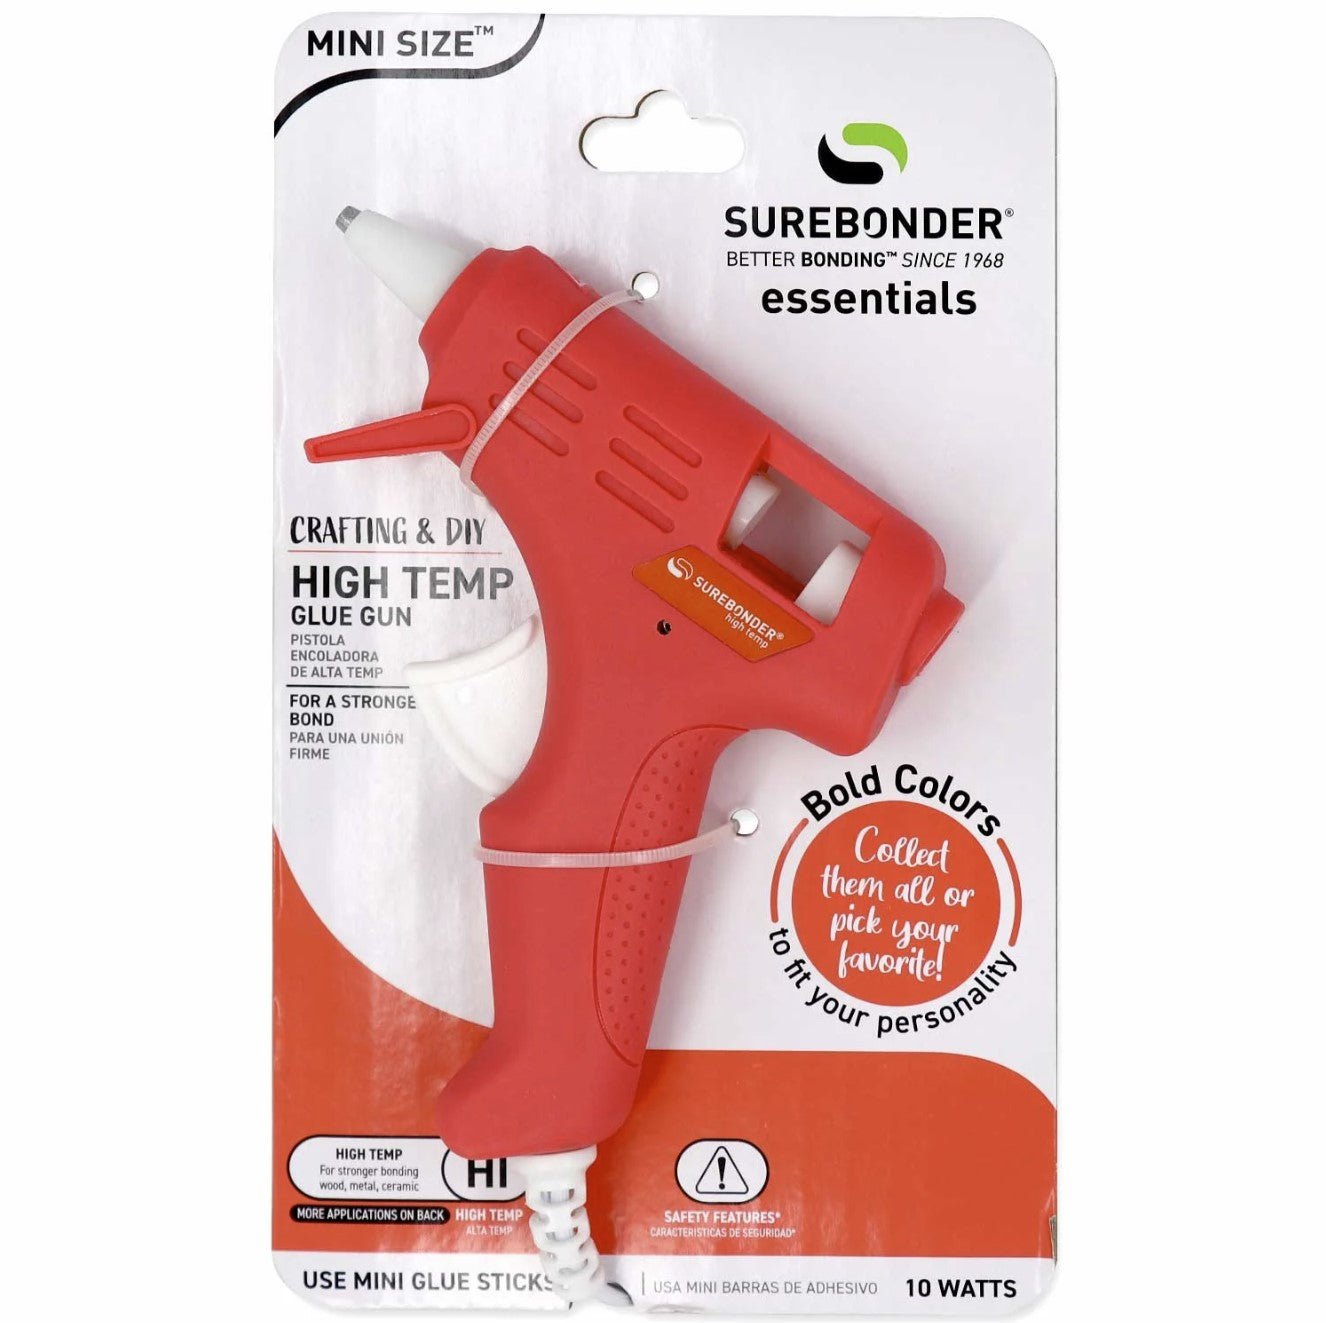 Mini Size High Temp Glue Gun, 10 Watt (Ref. GM-16COR), Coral Red Colored Essentials Series by Surebonder®